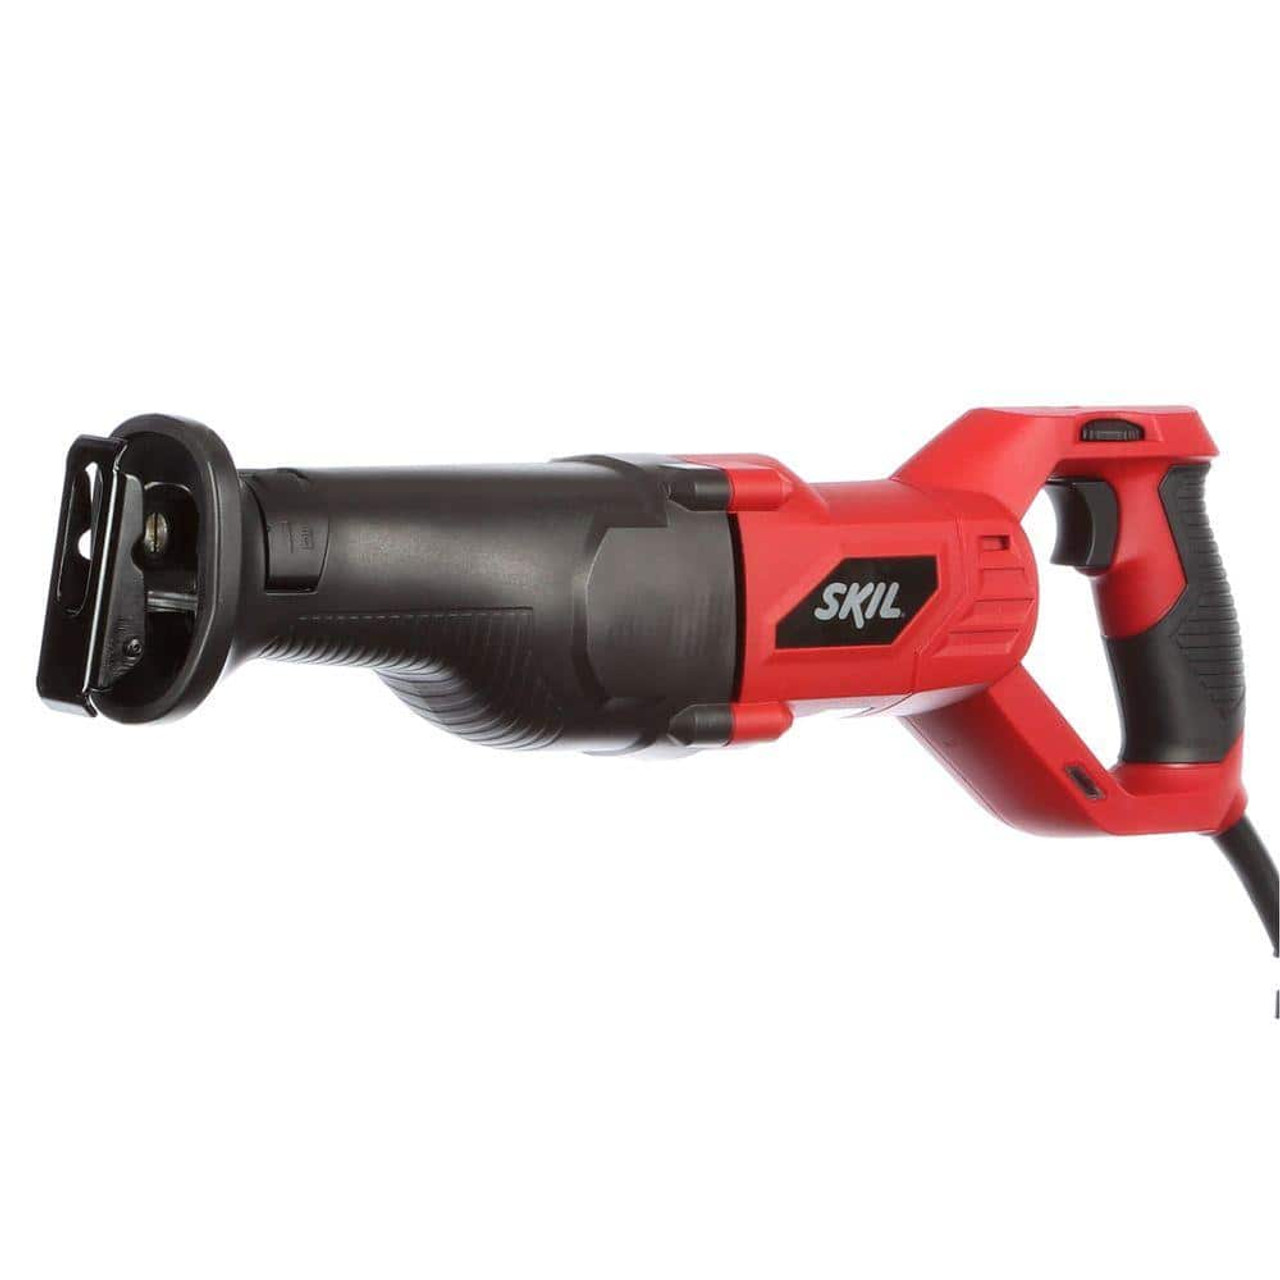 Skil 9216-01 Amp Reciprocating Saw, Red JB Tools